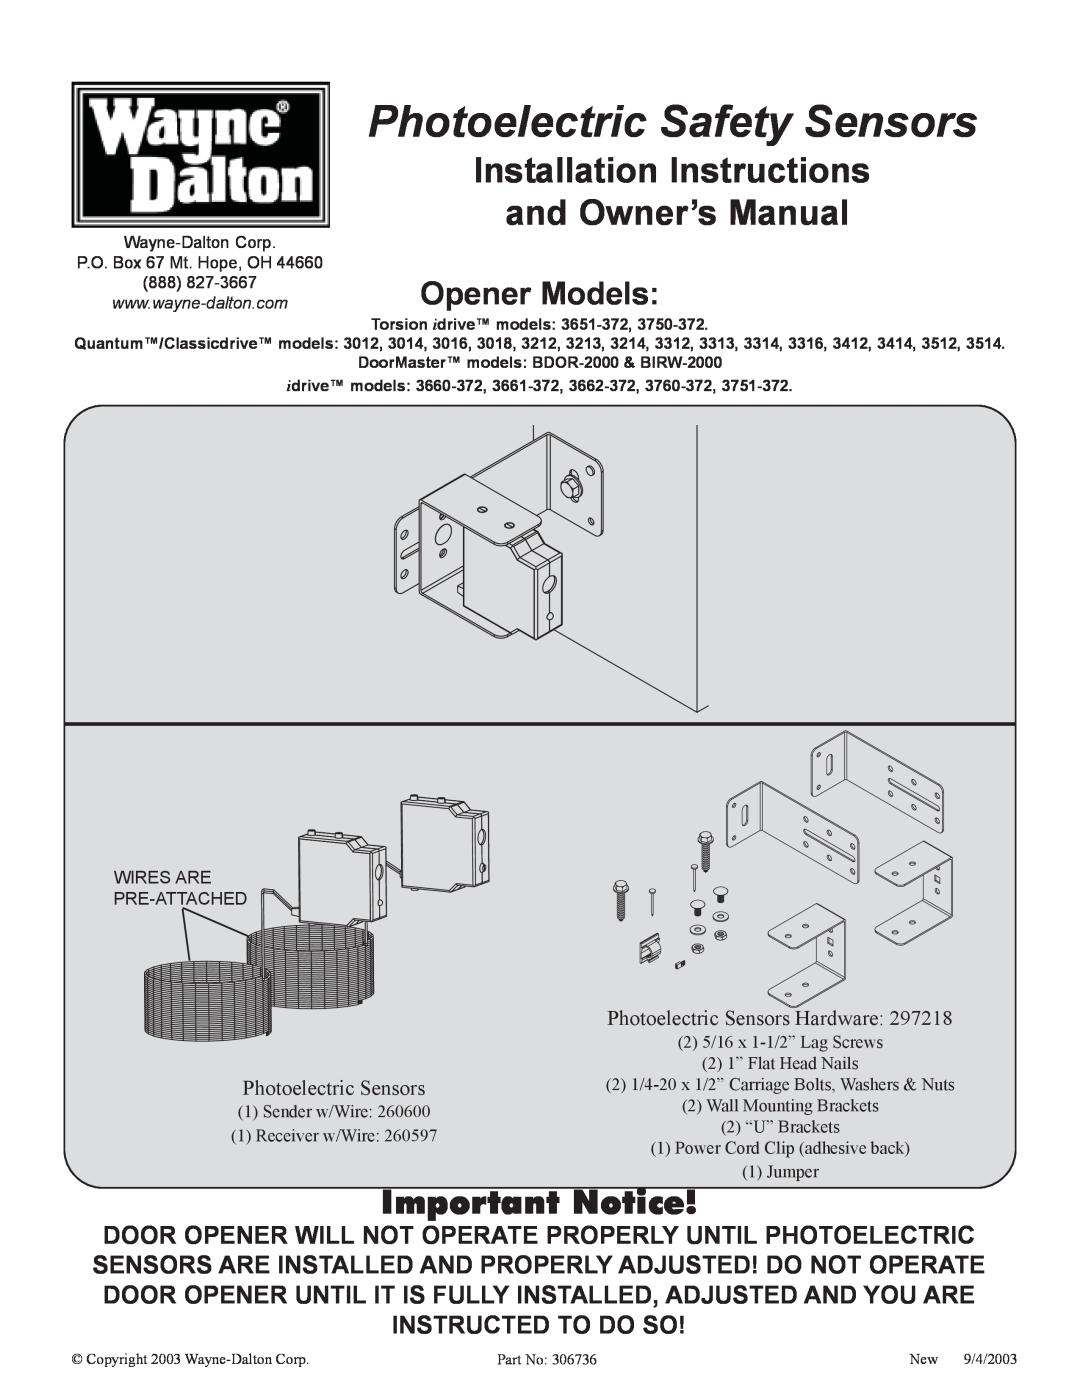 Wayne-Dalton 3014 installation instructions Opener Models, Photoelectric Safety Sensors, Important Notice, Sender w/Wire 